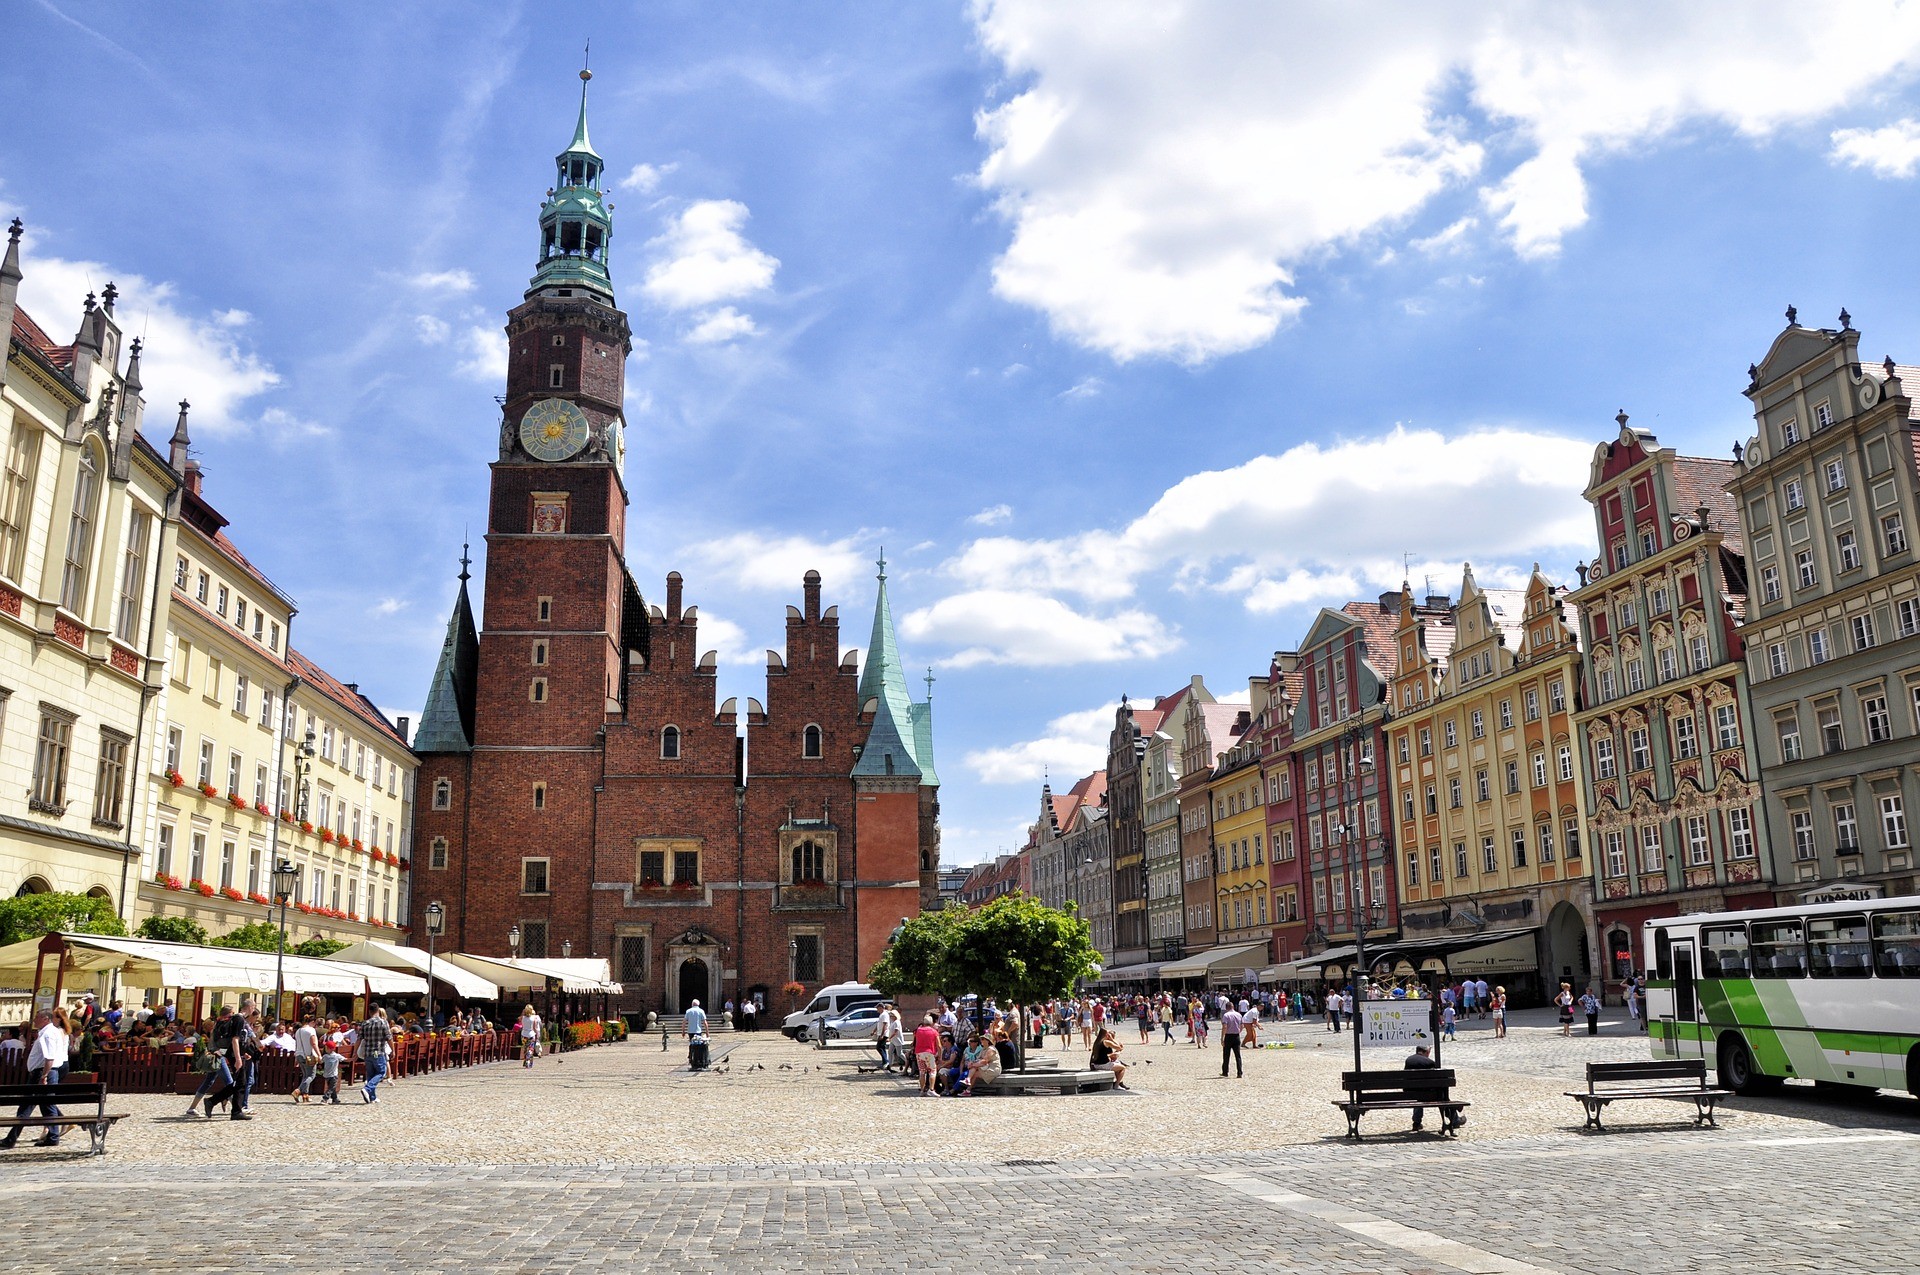 wroclaw-ciudad-mas-espectacular-polonia-